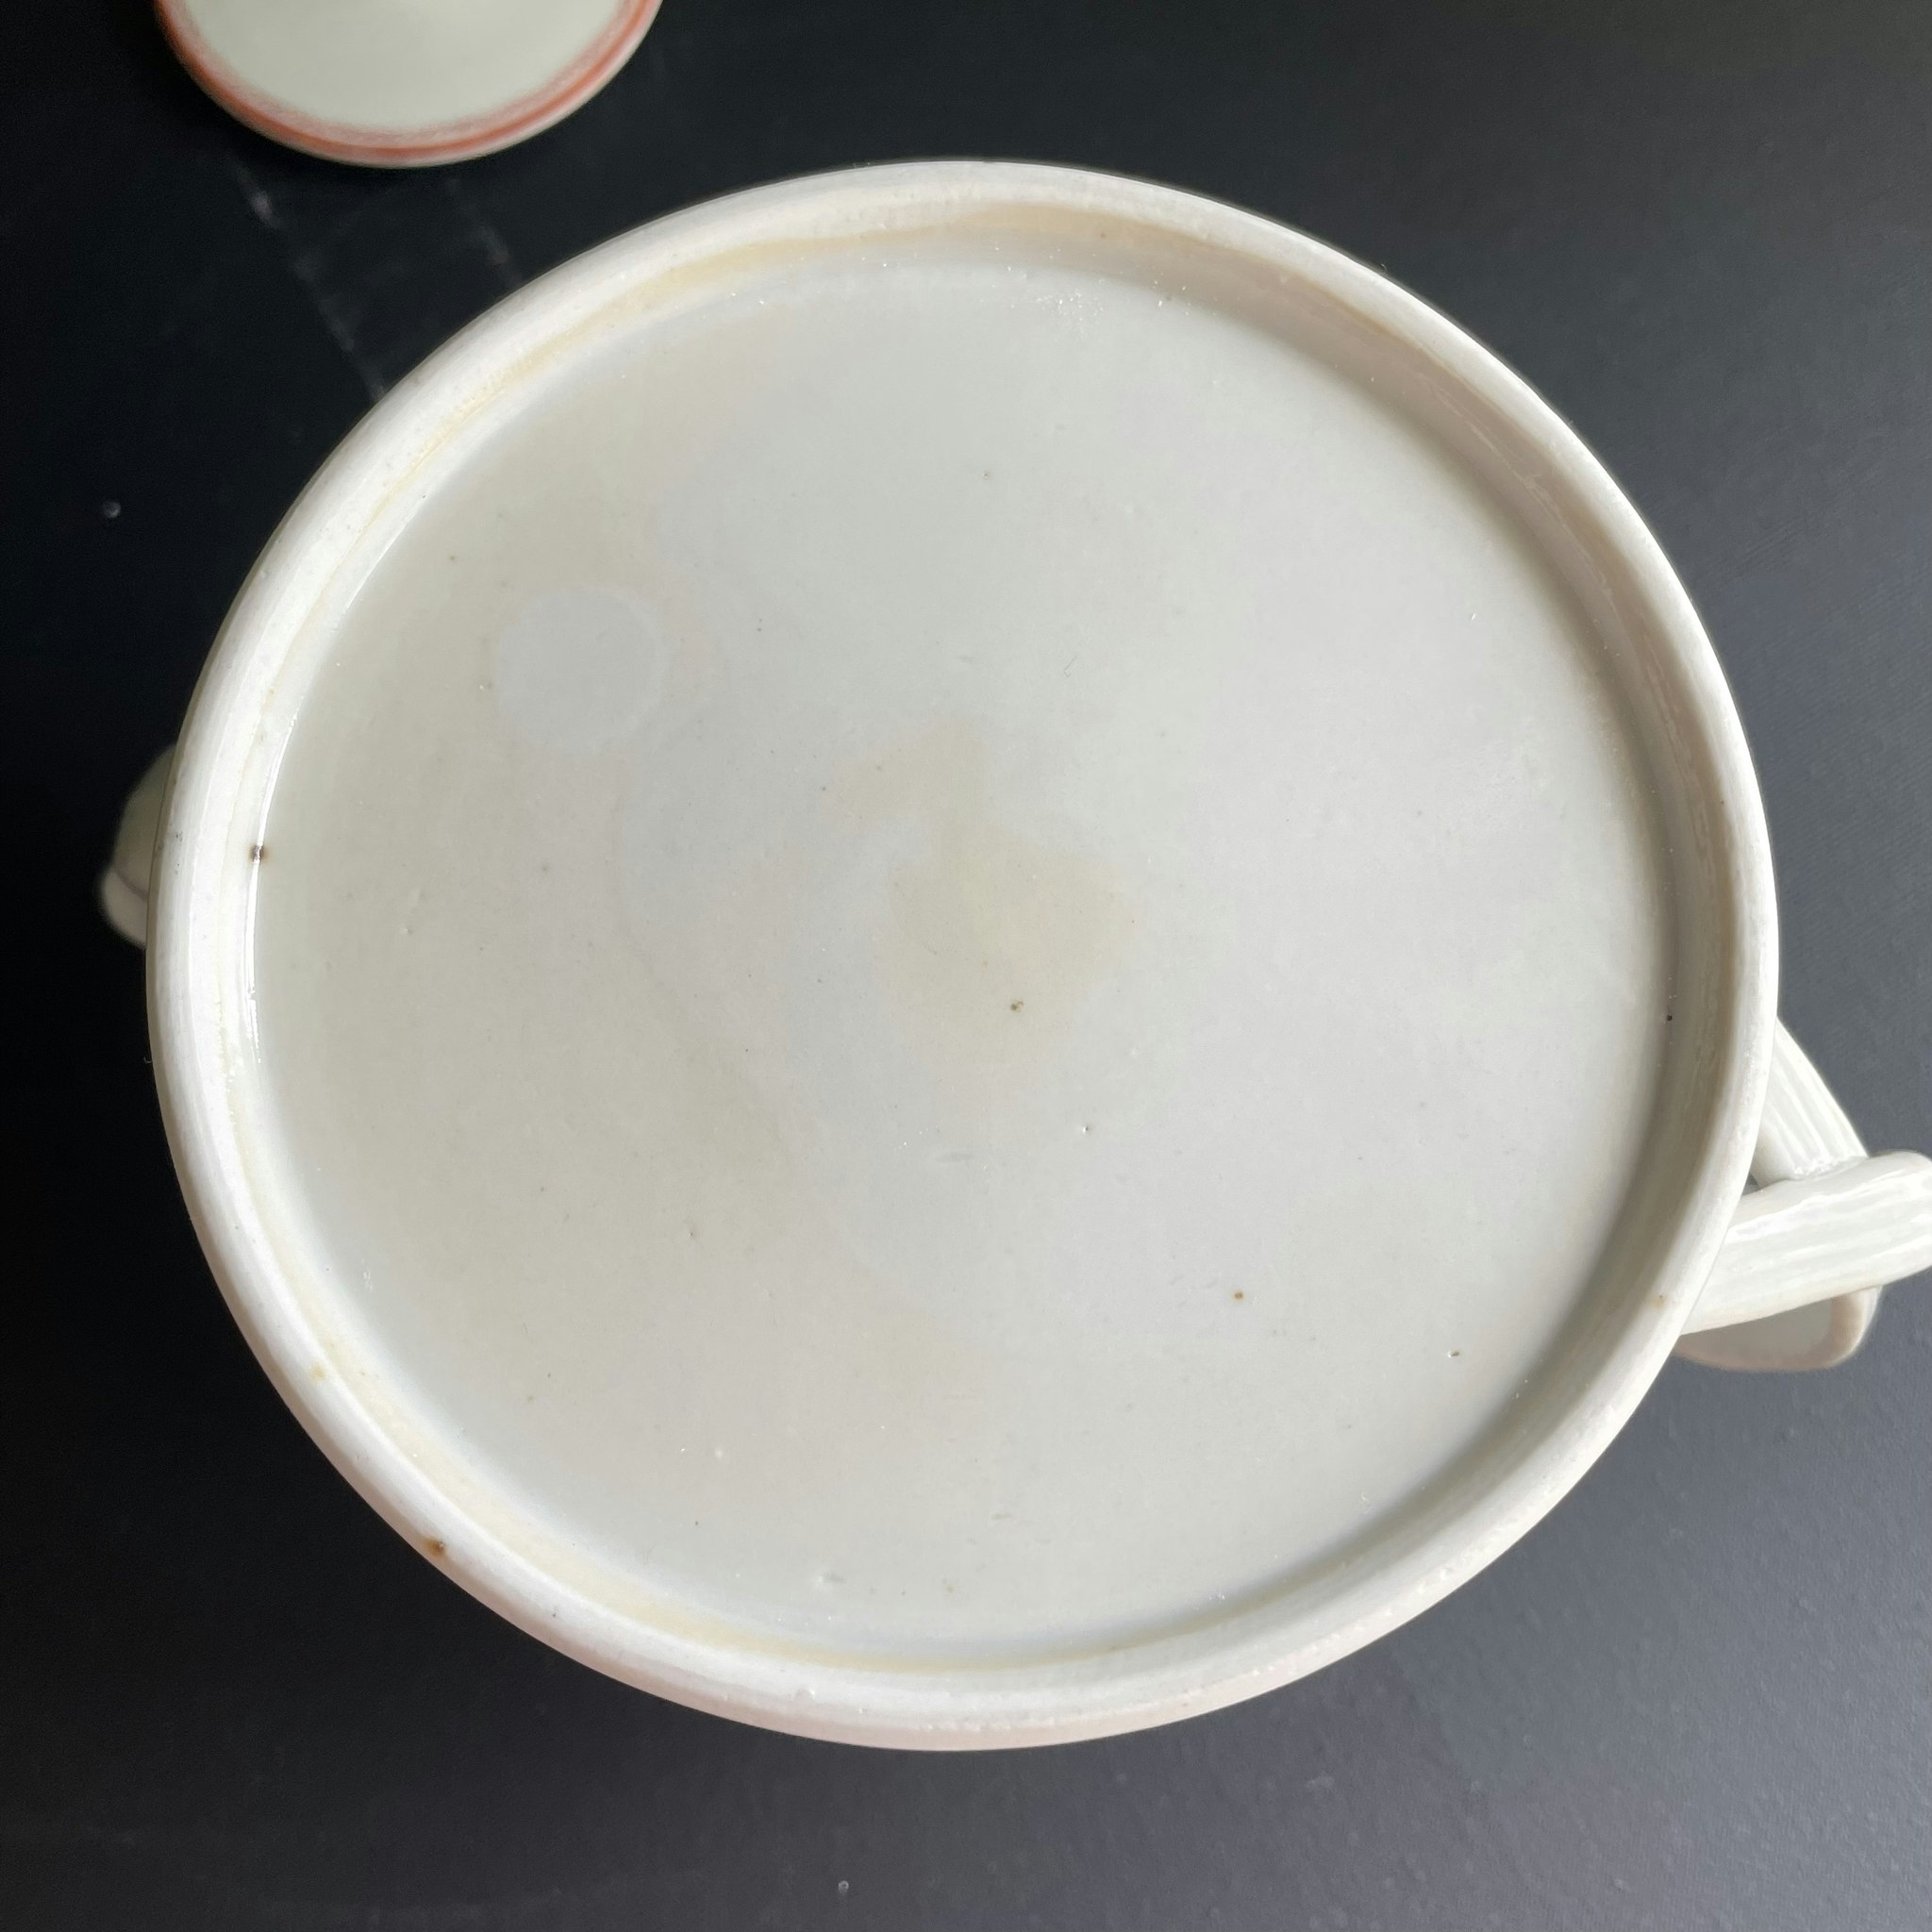 Antique Chinese Porcelain tea pot 18c Jiaqing period #1163